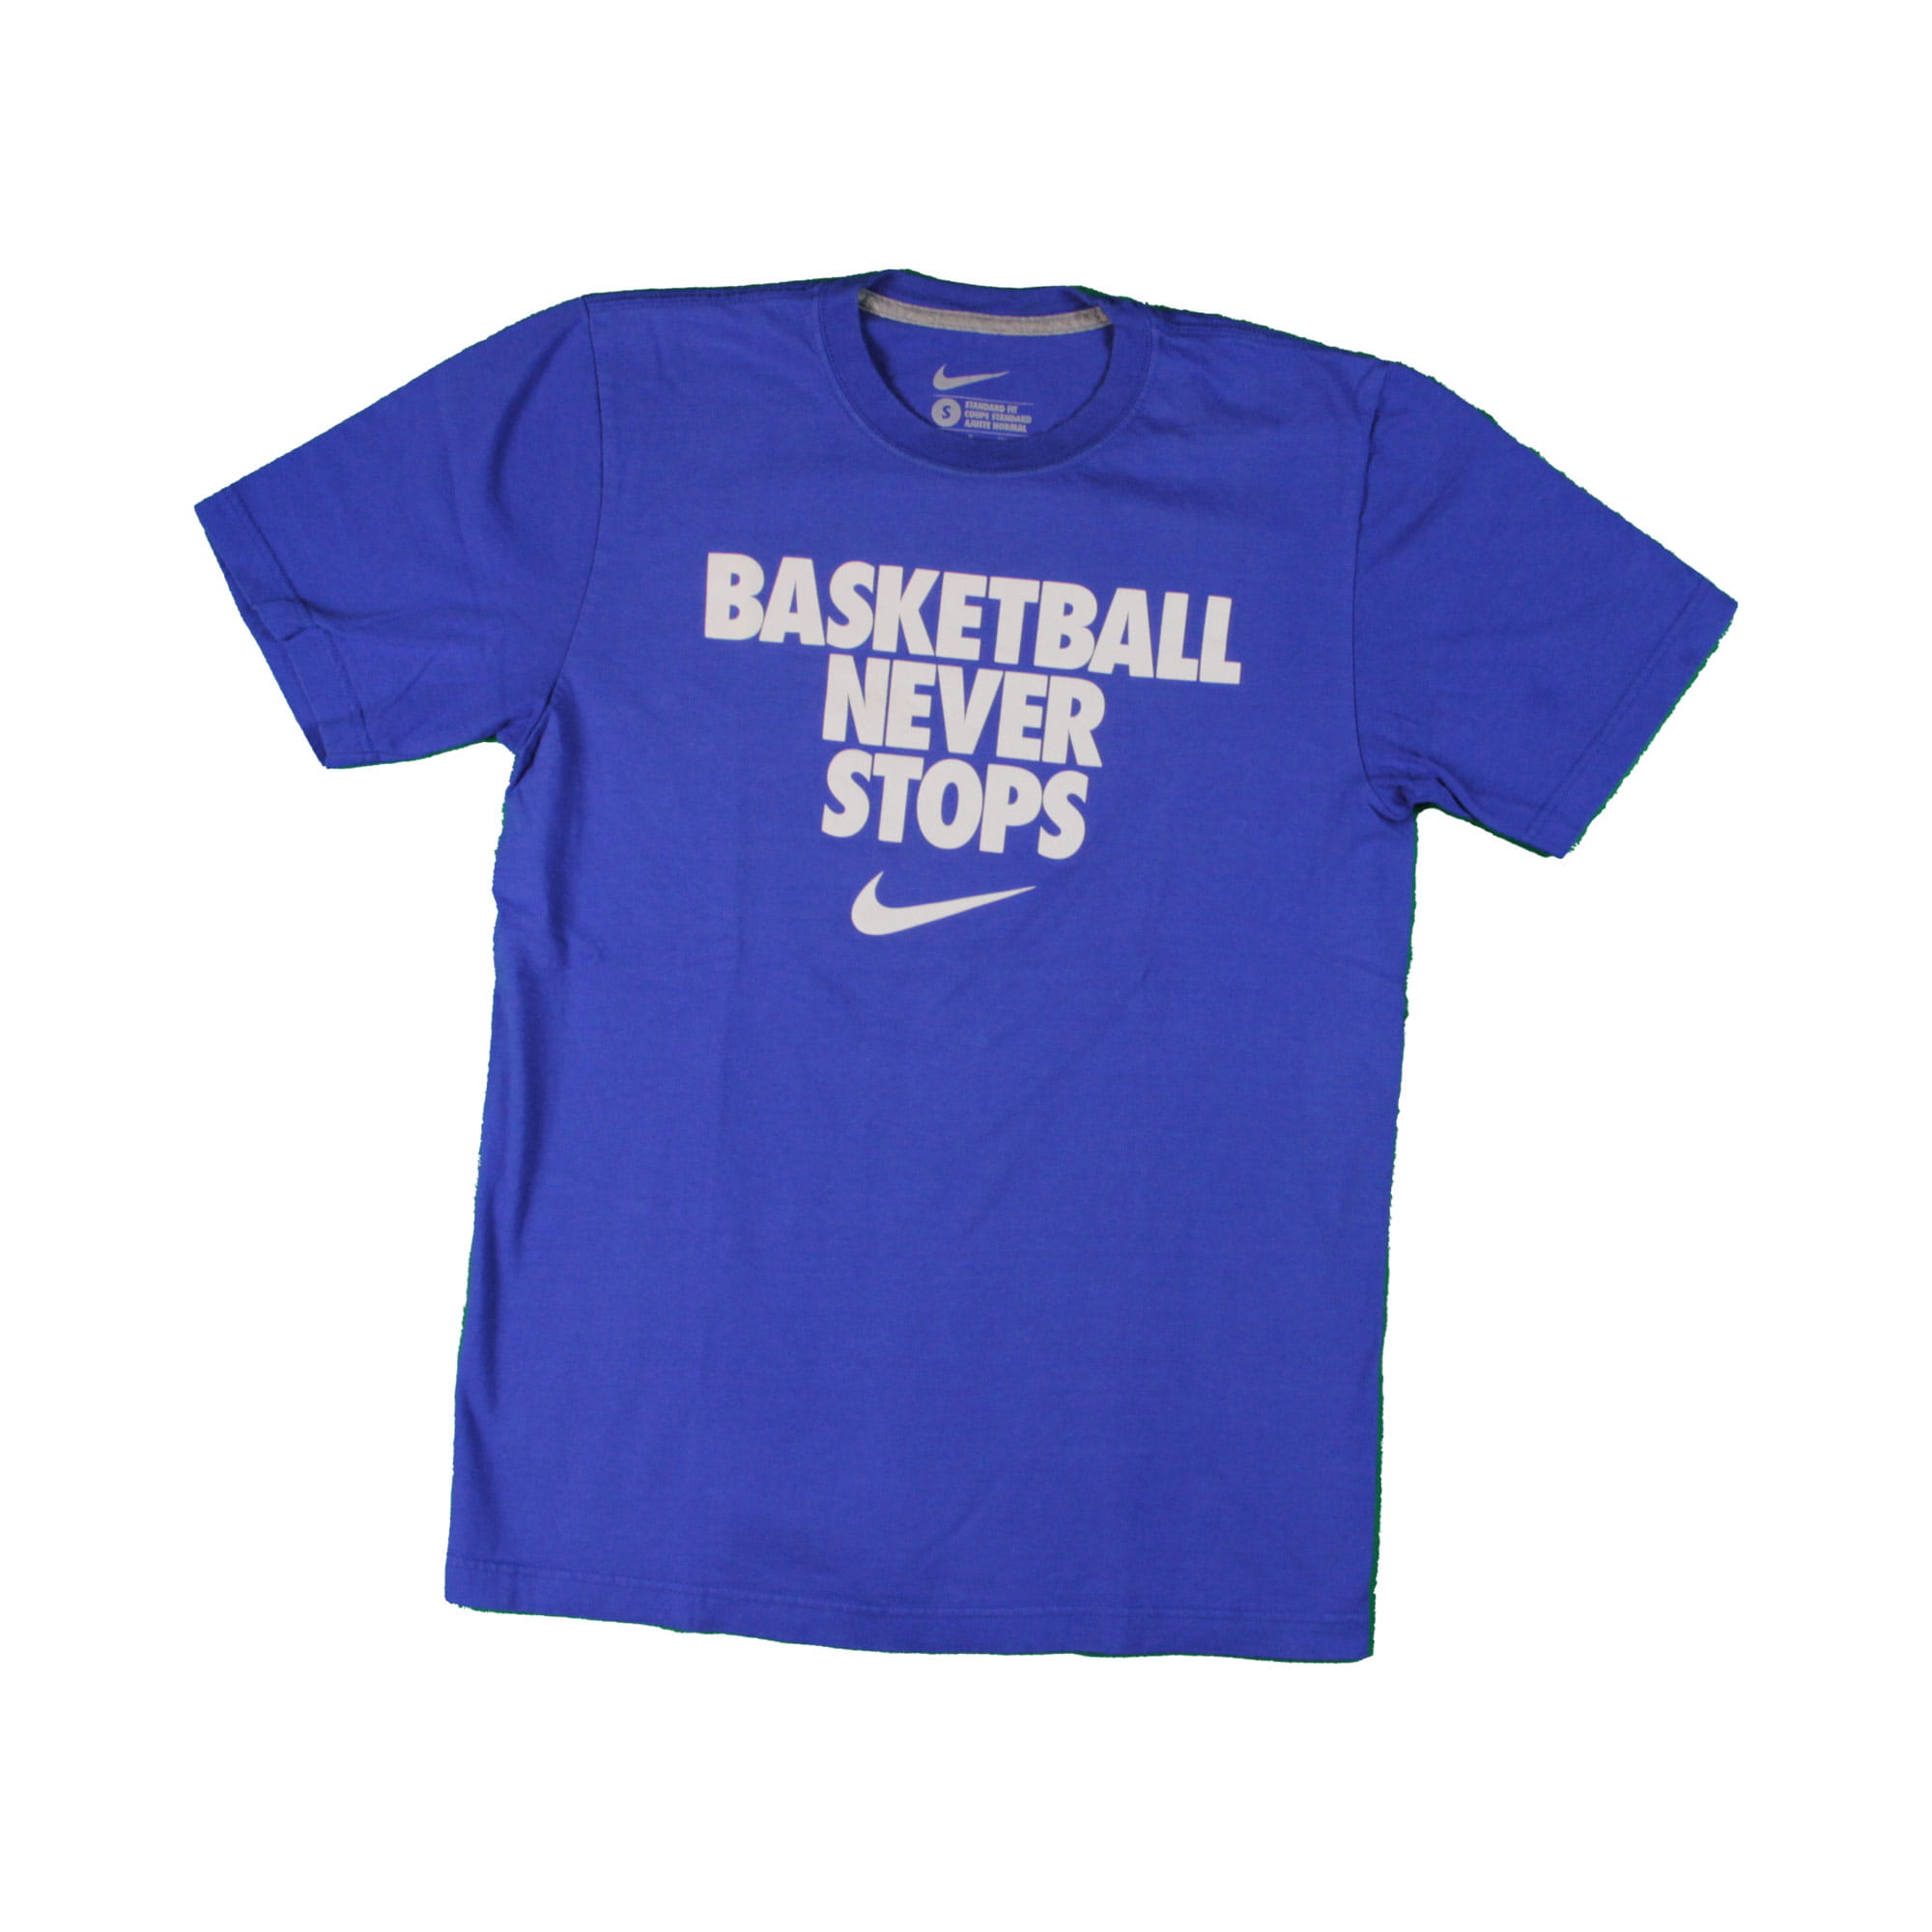 Nike Basketball Never Stops T-Shirt - M